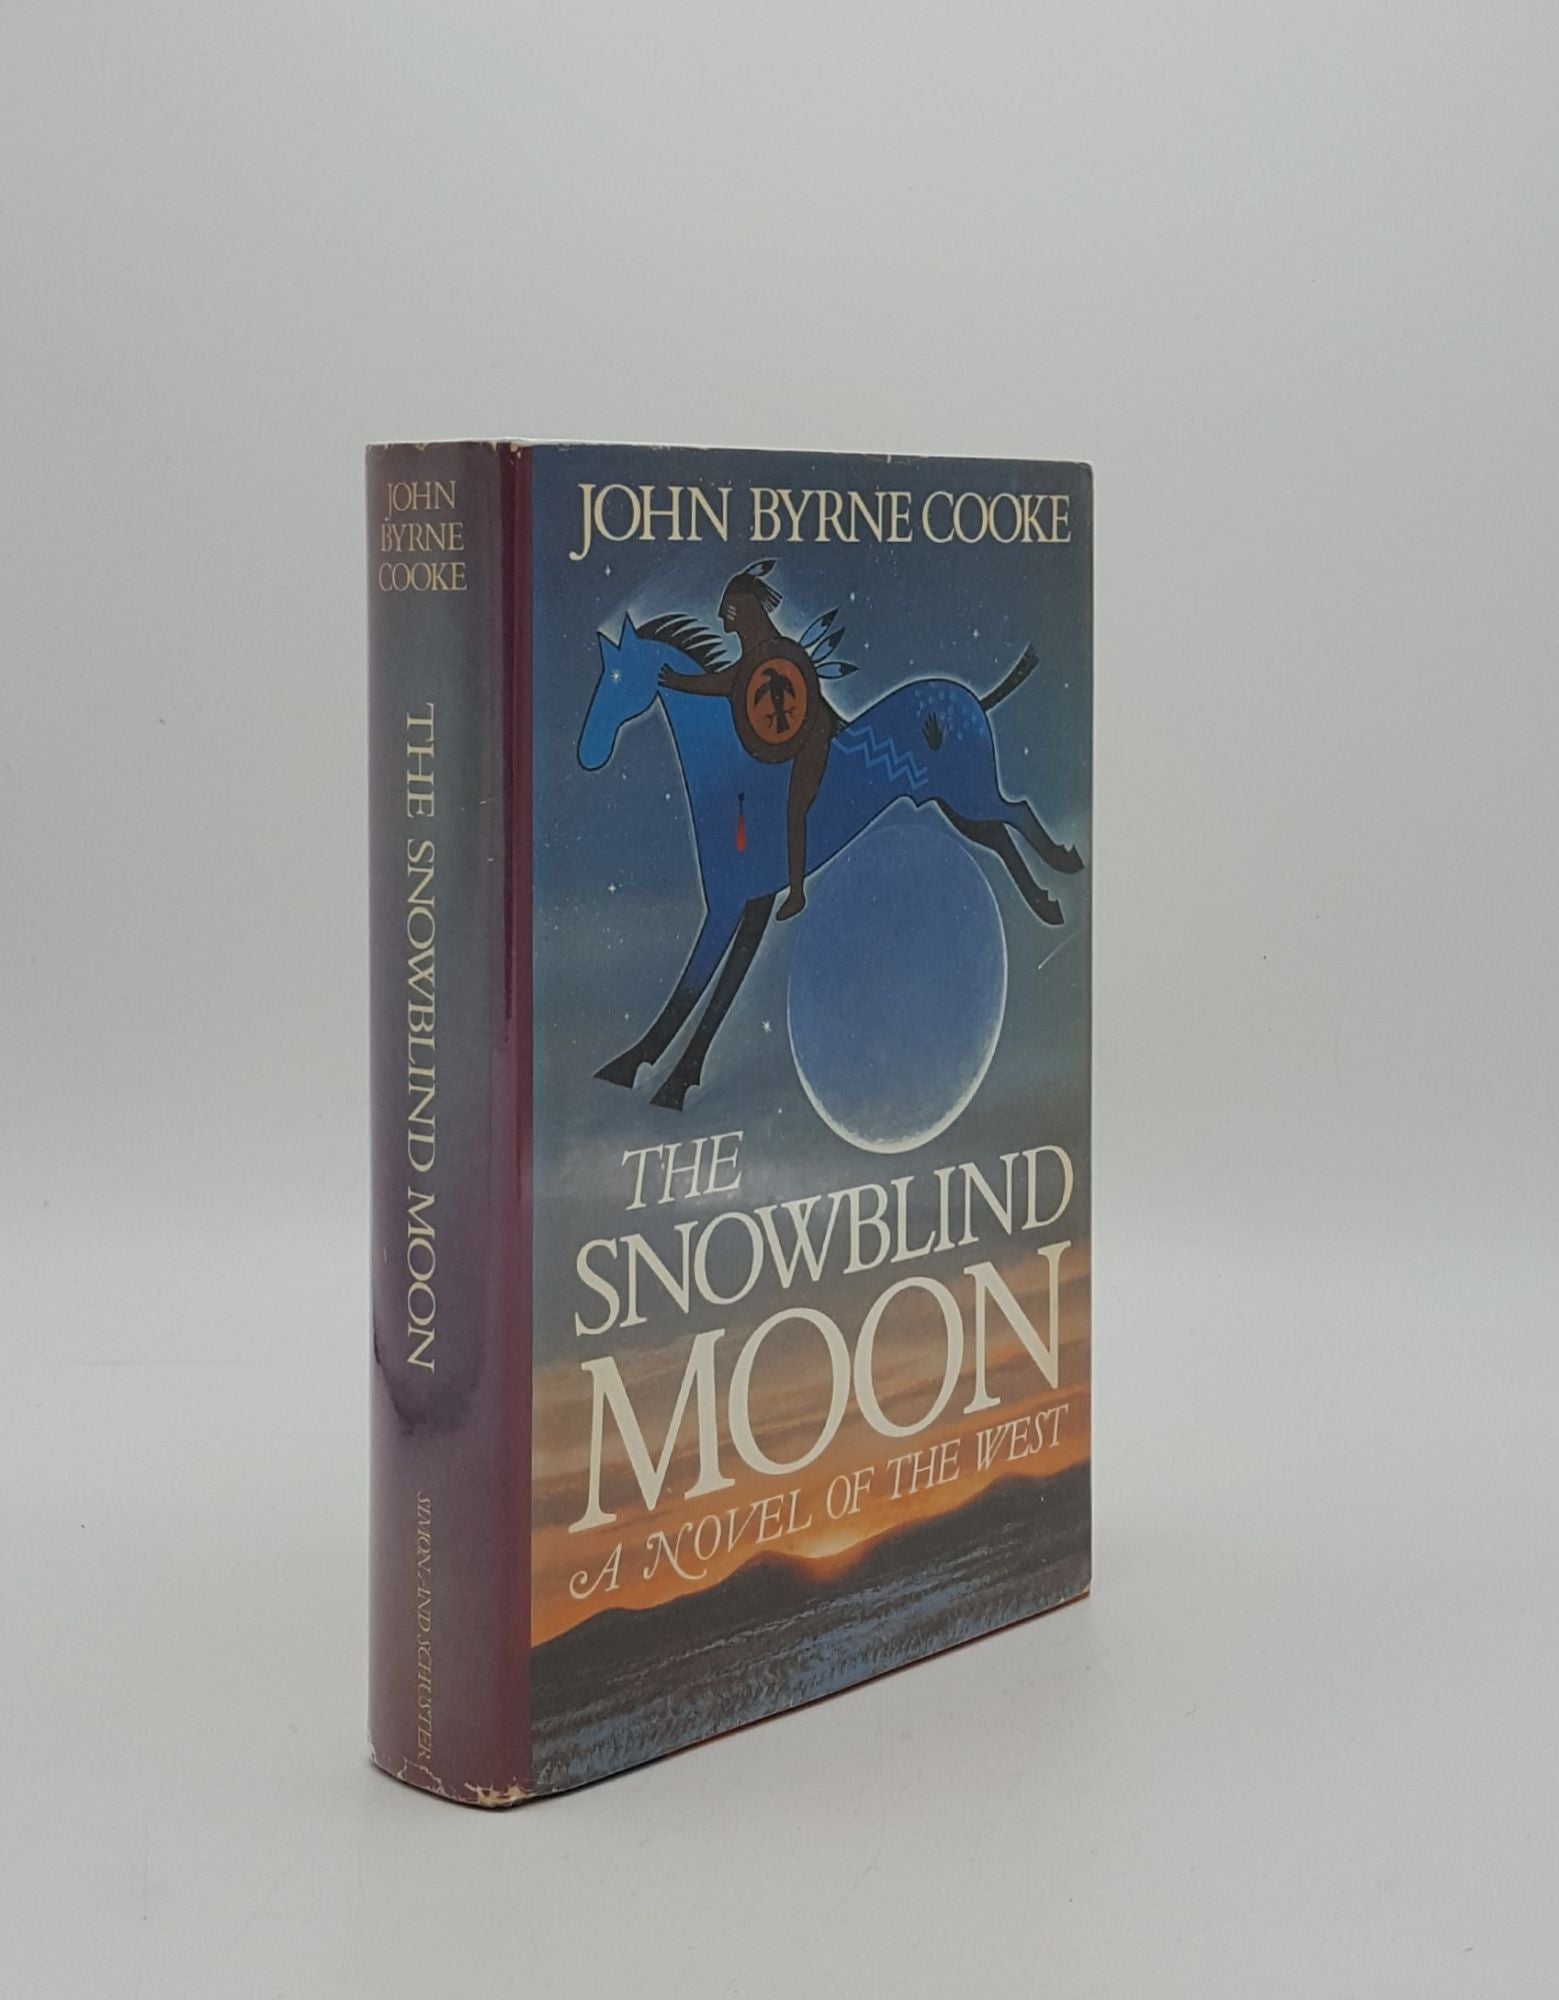 COOKE John Bryne - The Snowblind Moon a Novel of the West